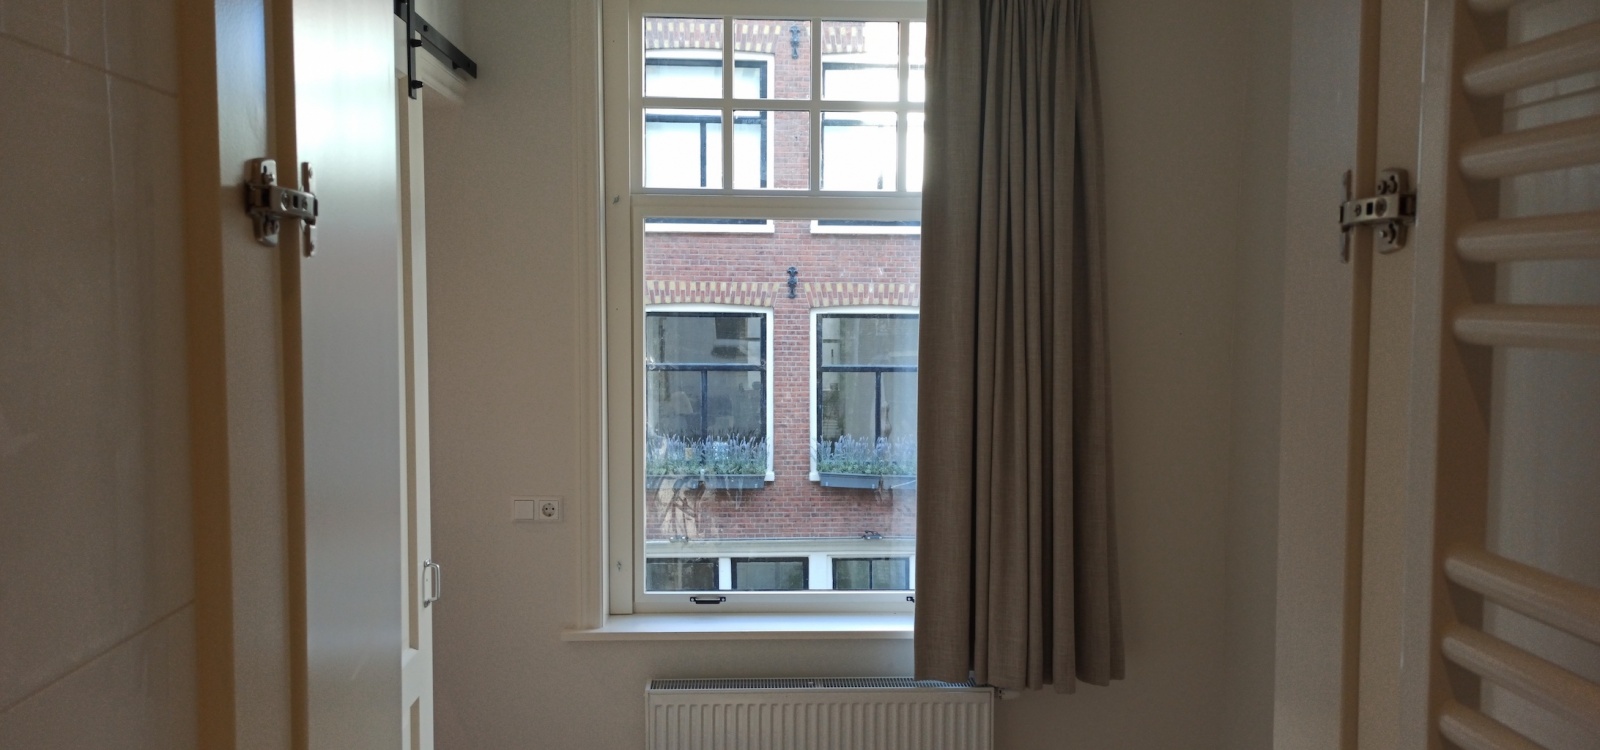 Reguliersdwarsstraat,Netherlands 1017BK,1 Bedroom Bedrooms,1 BathroomBathrooms,Apartment,Reguliersdwarsstraat,1,1457